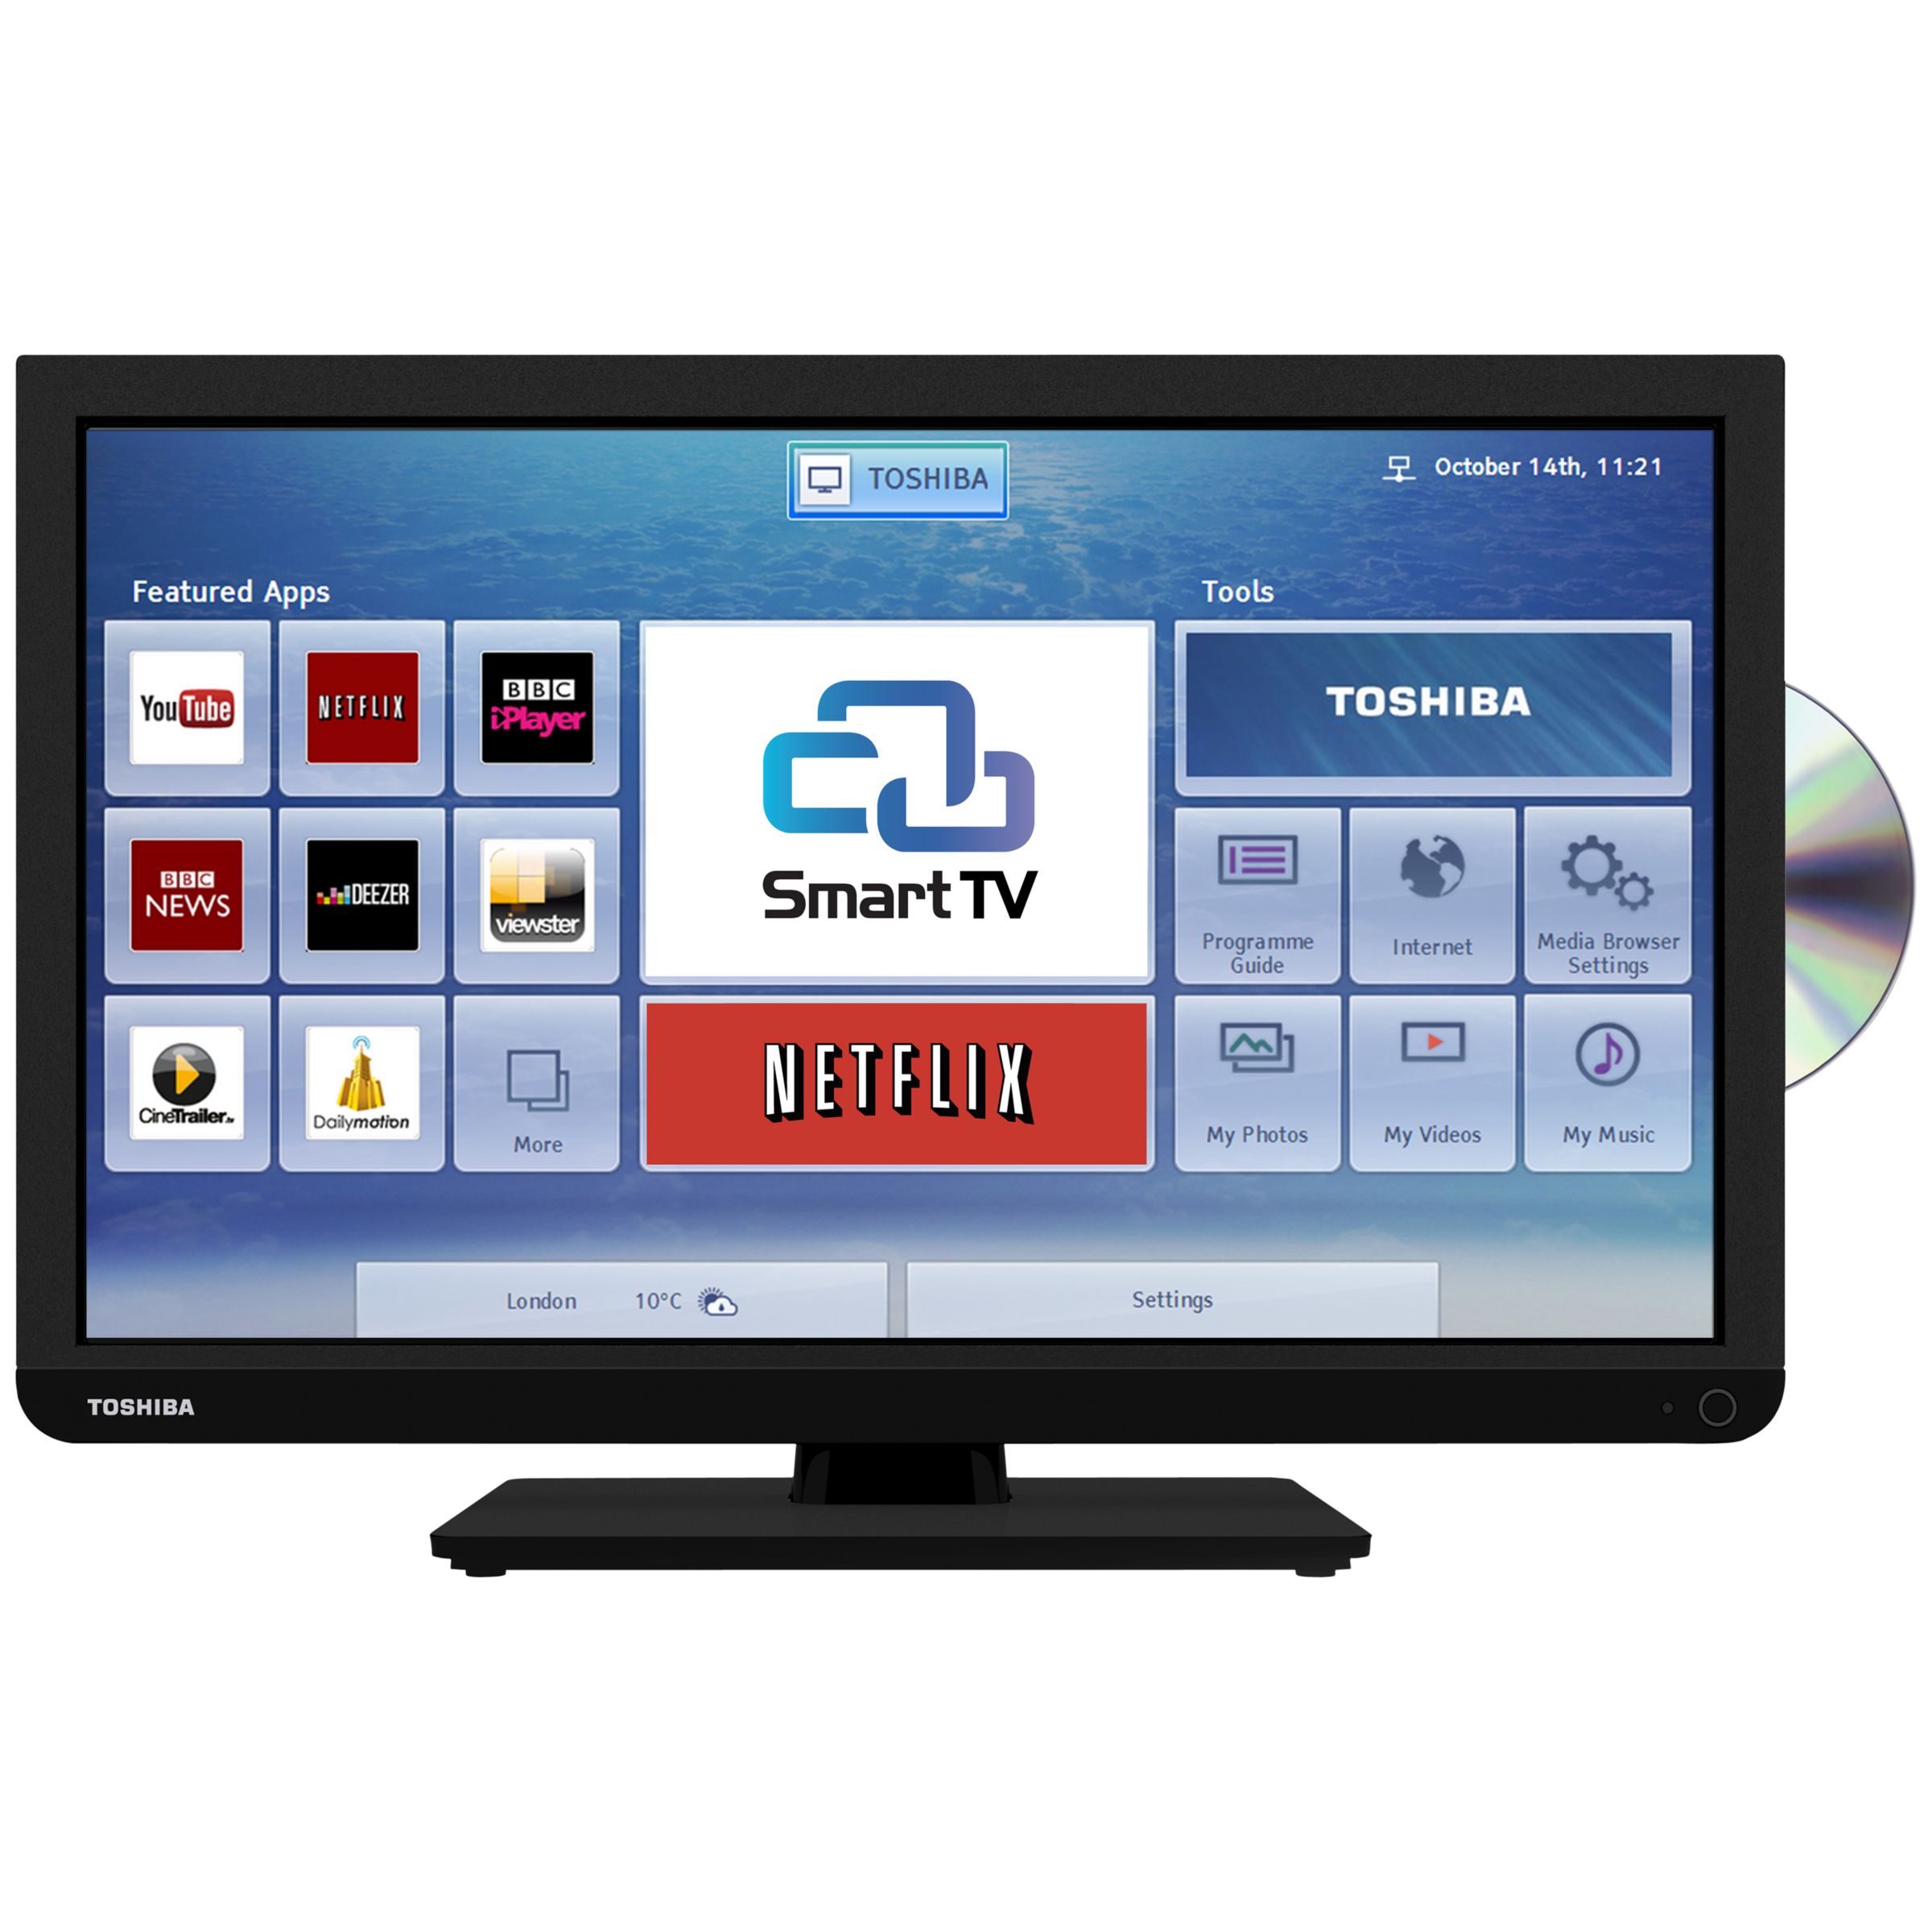 Toshiba Smart TV. Телевизор Toshiba Smart TV. Тошиба смарт ТВ 2013г. Toshiba смарт ТВ приложения. Кнопки на телевизоре тошиба